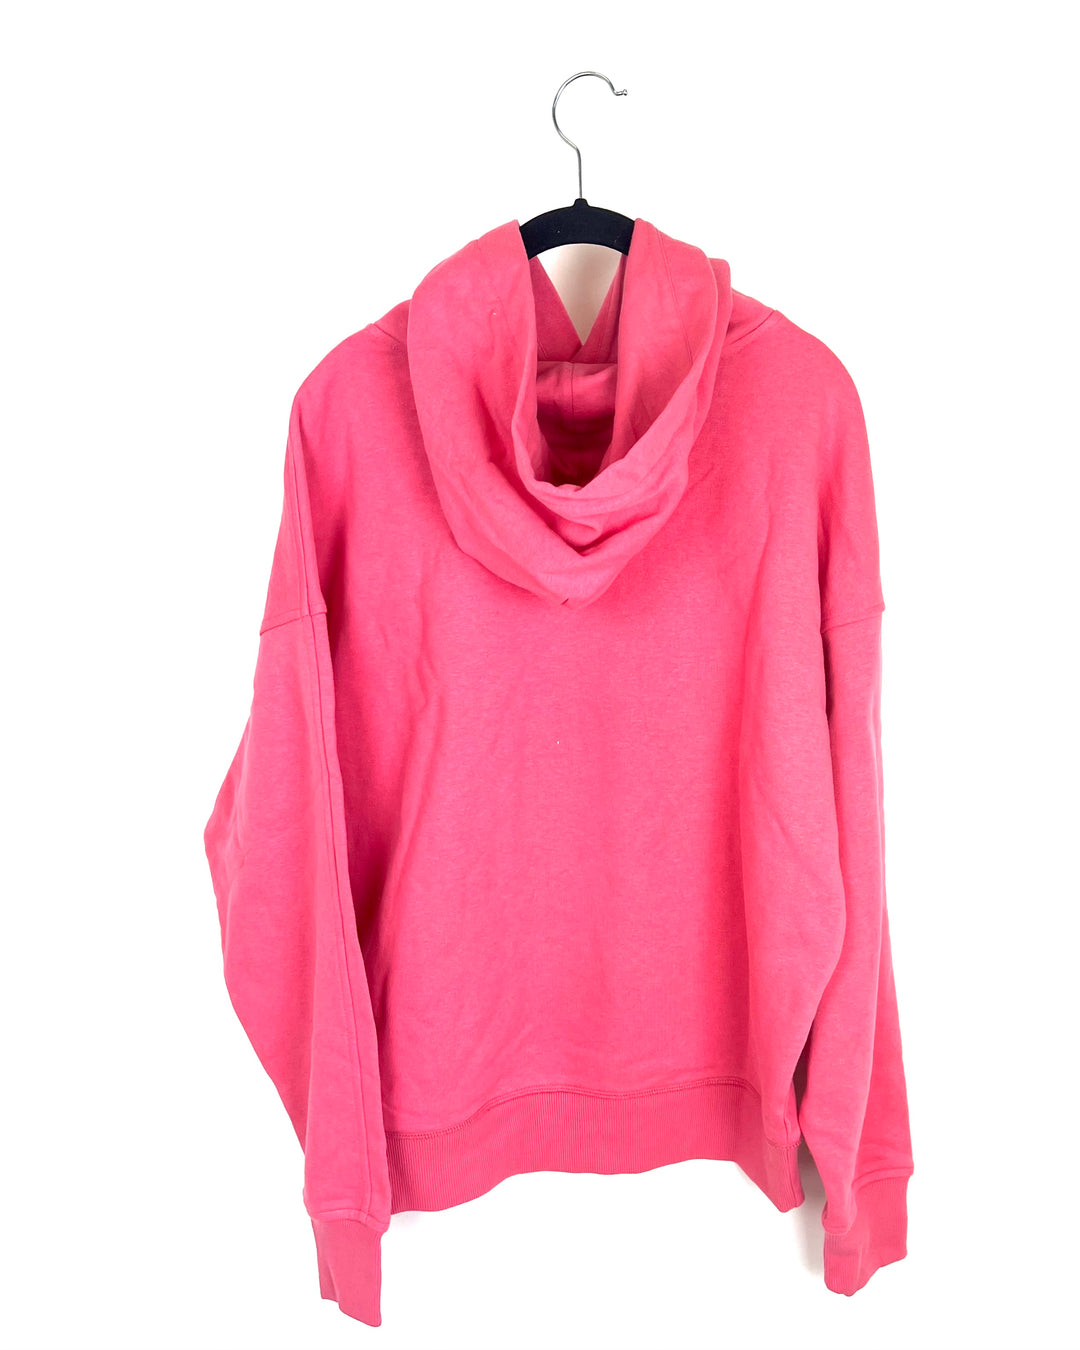 Pink Sweatshirt - Small